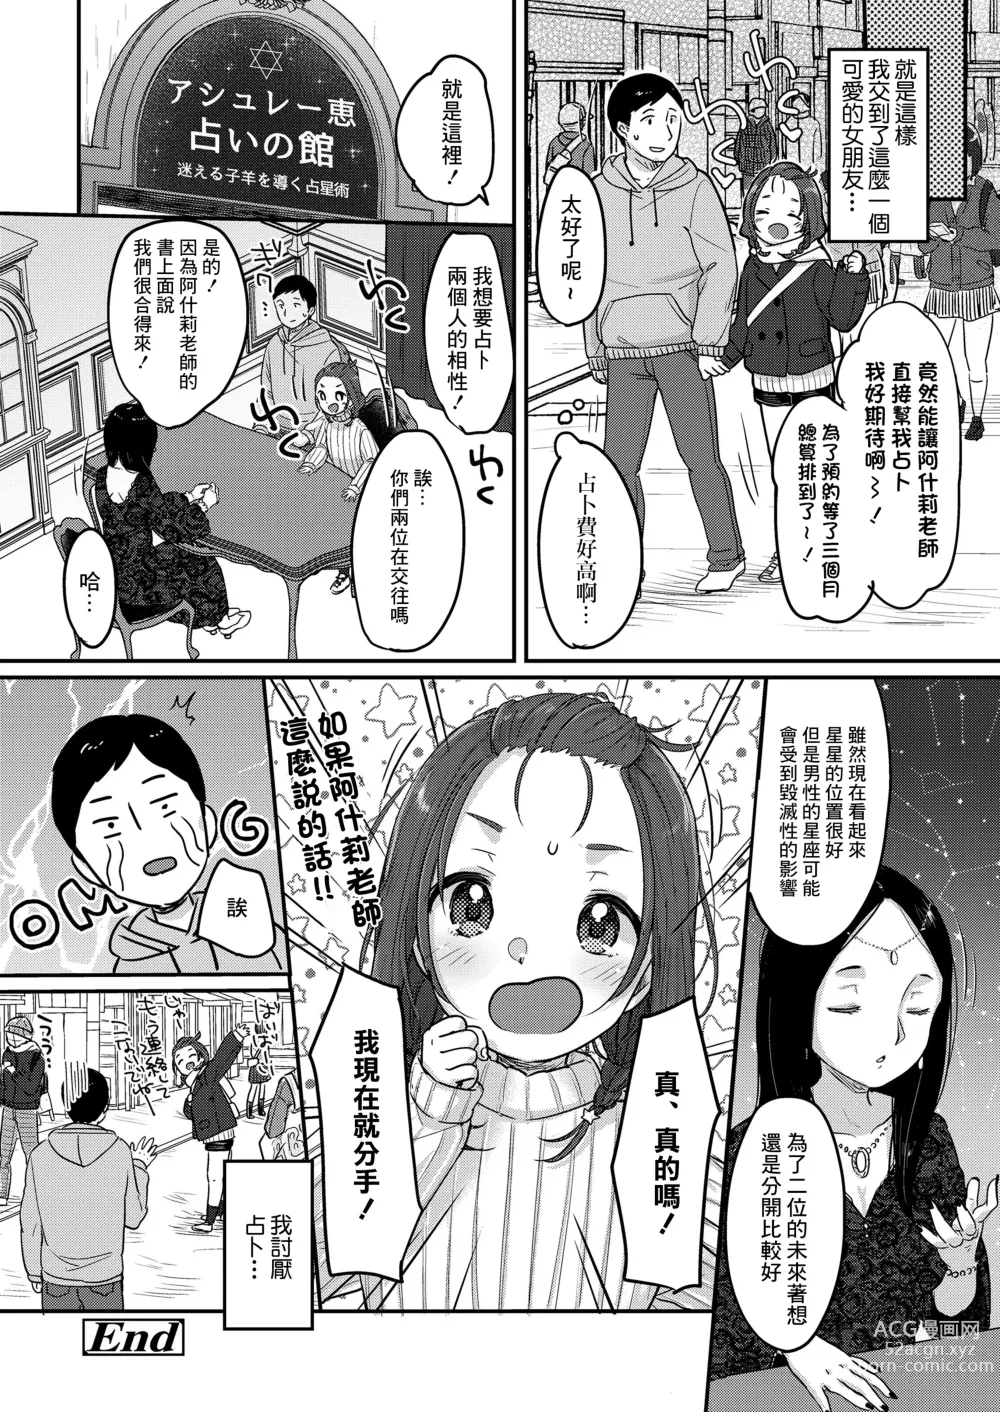 Page 20 of manga Kyou no Lucky Item